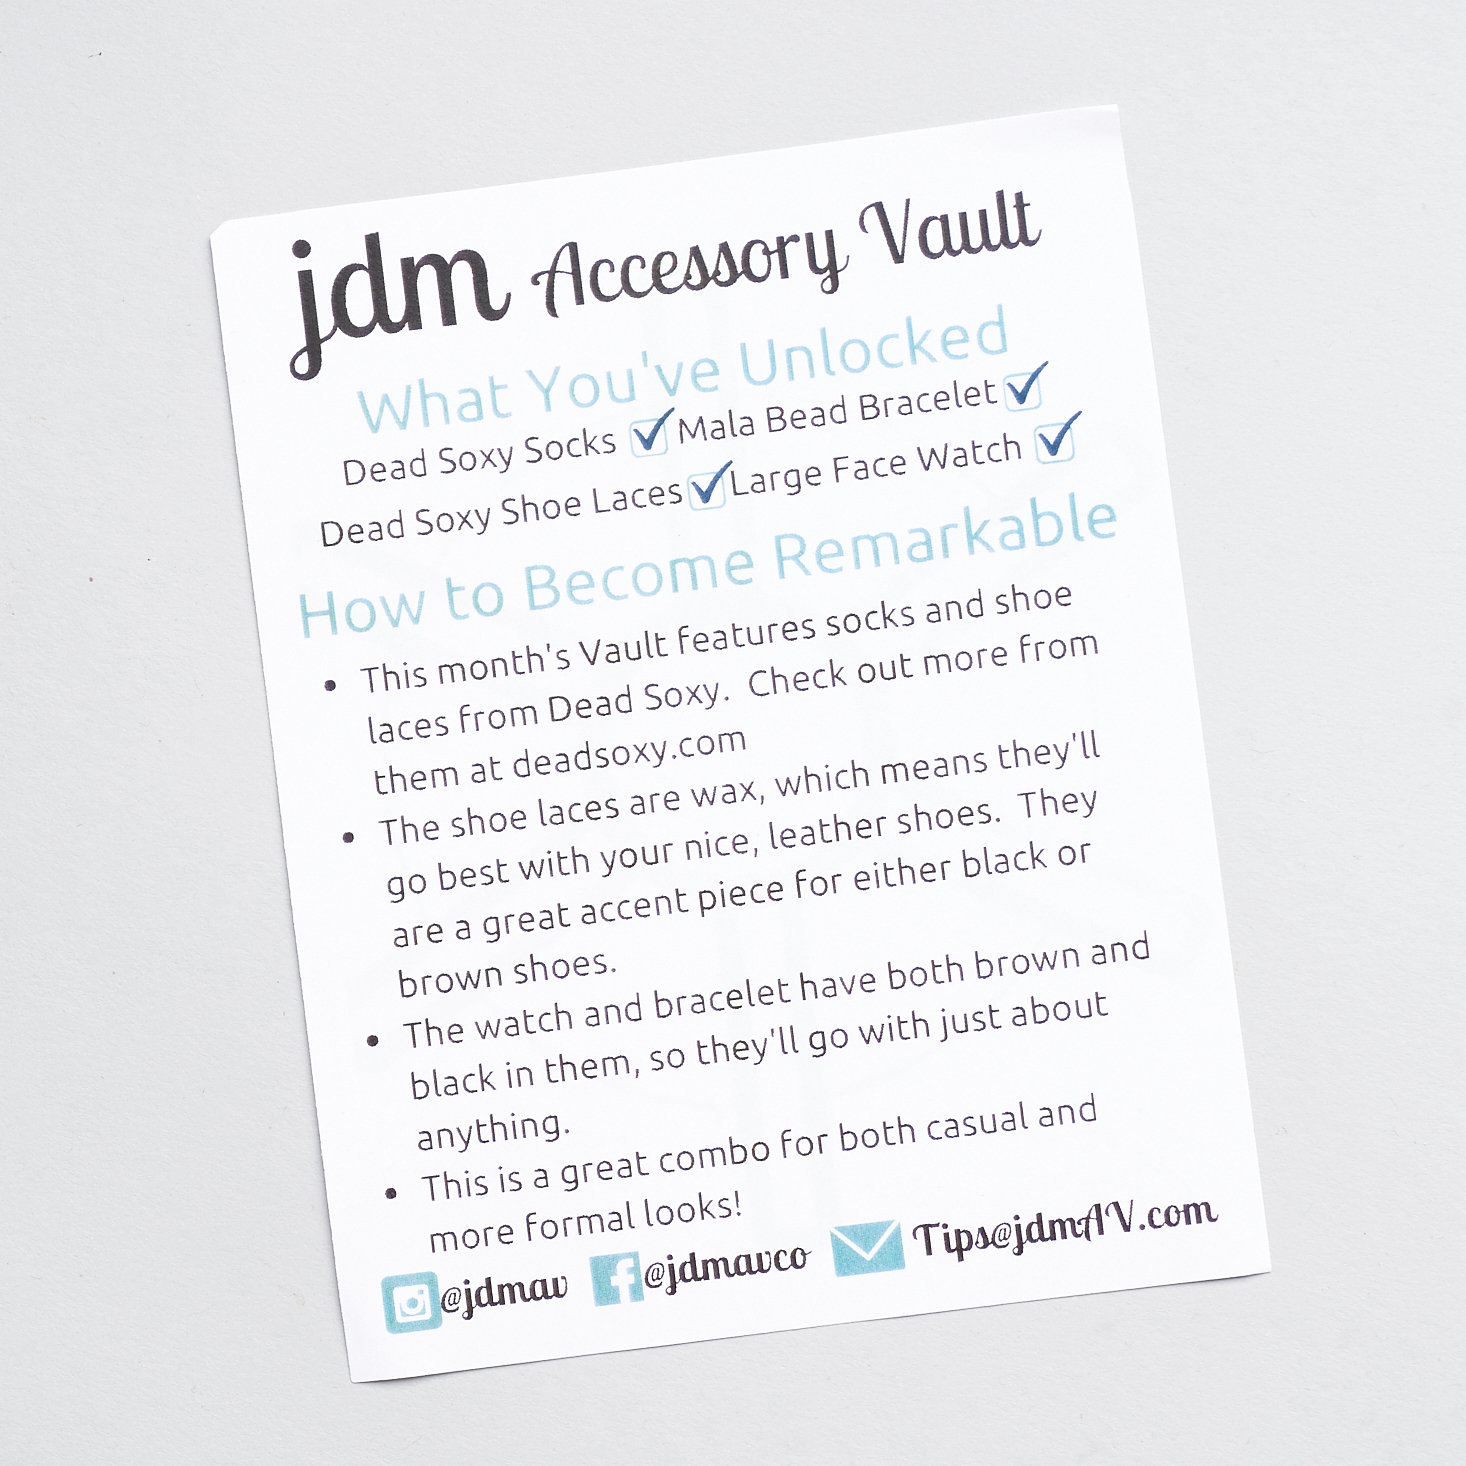 JDM-Accessory-Vault-March-2017-0004